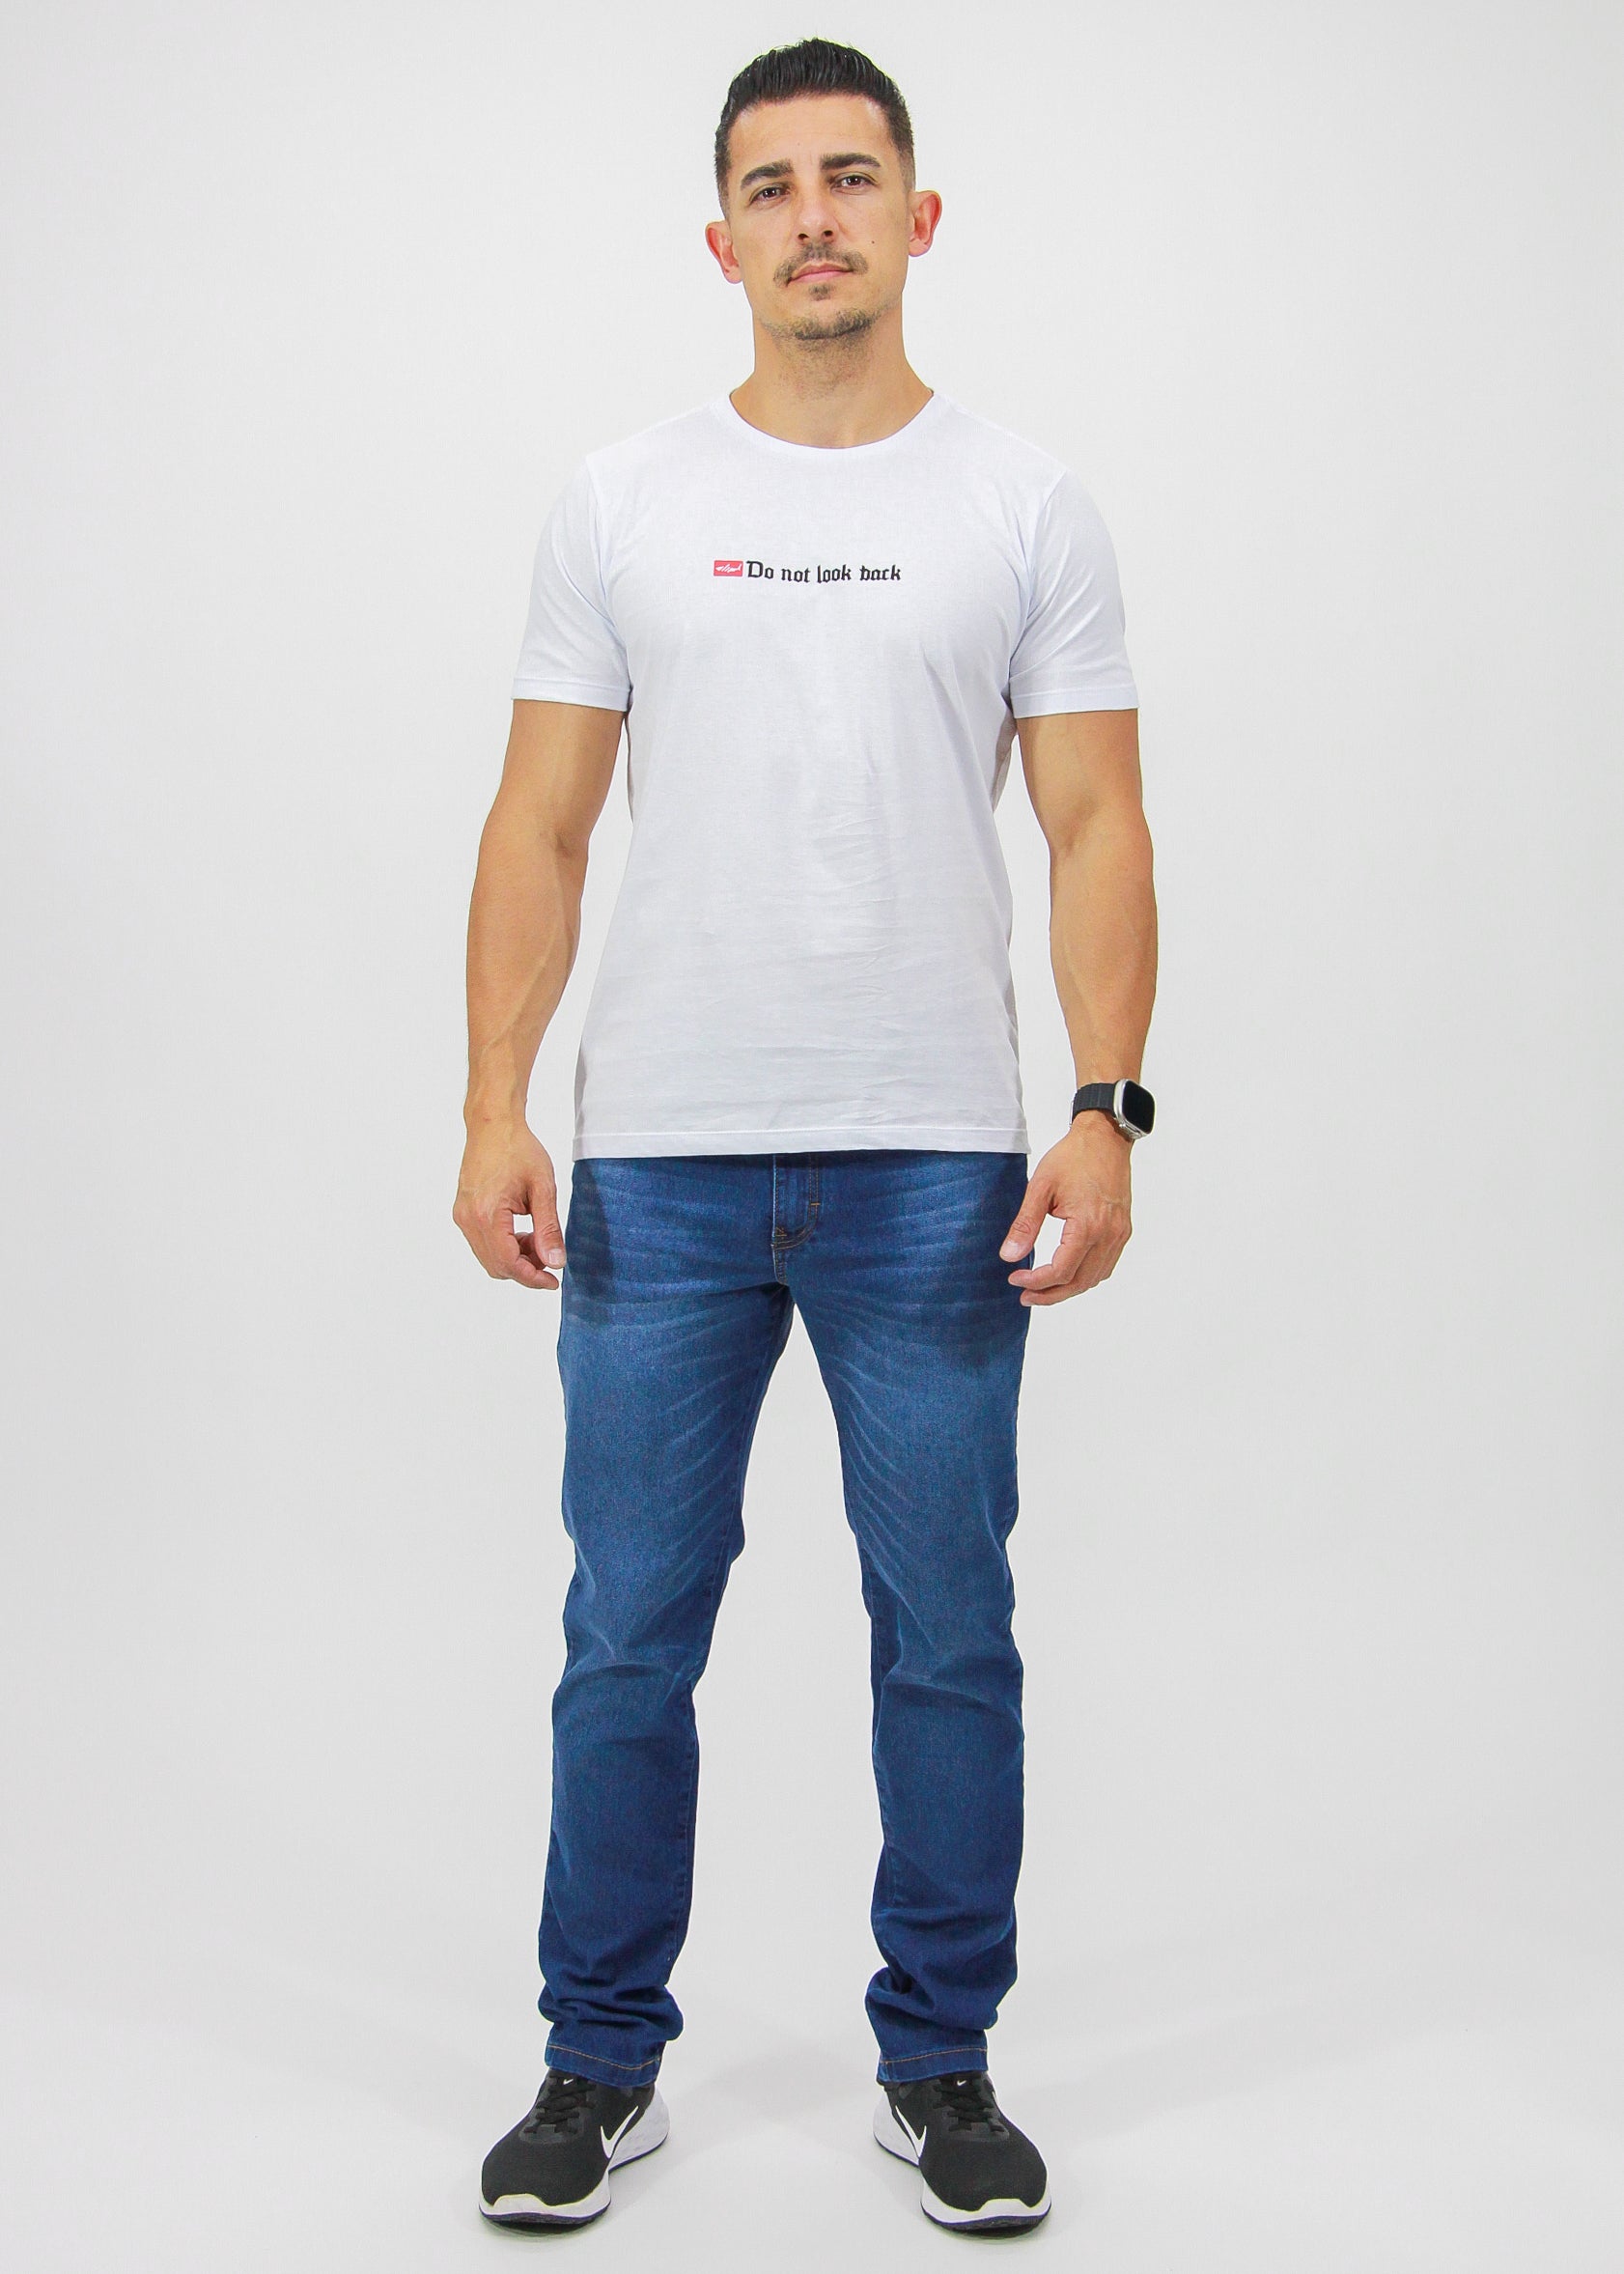 Camiseta Estampada Do Not - Branco